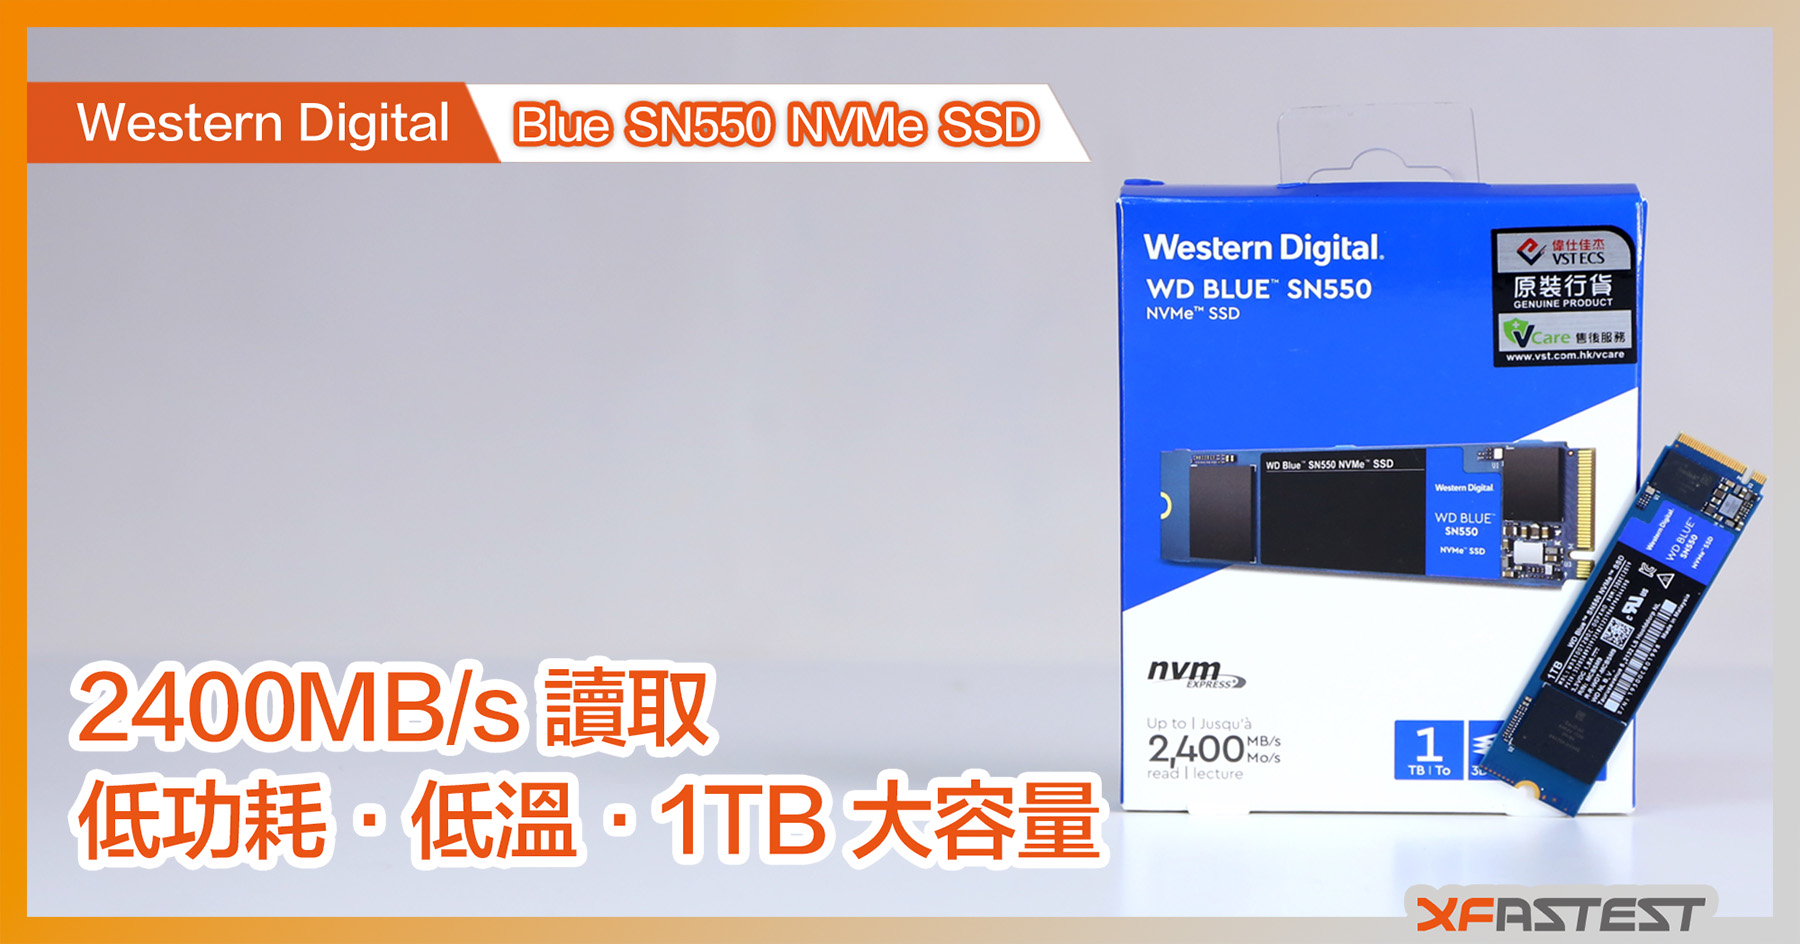 XF 開箱] 2400MB/s 讀取低功耗低溫1TB 大容量Western Digital Blue 